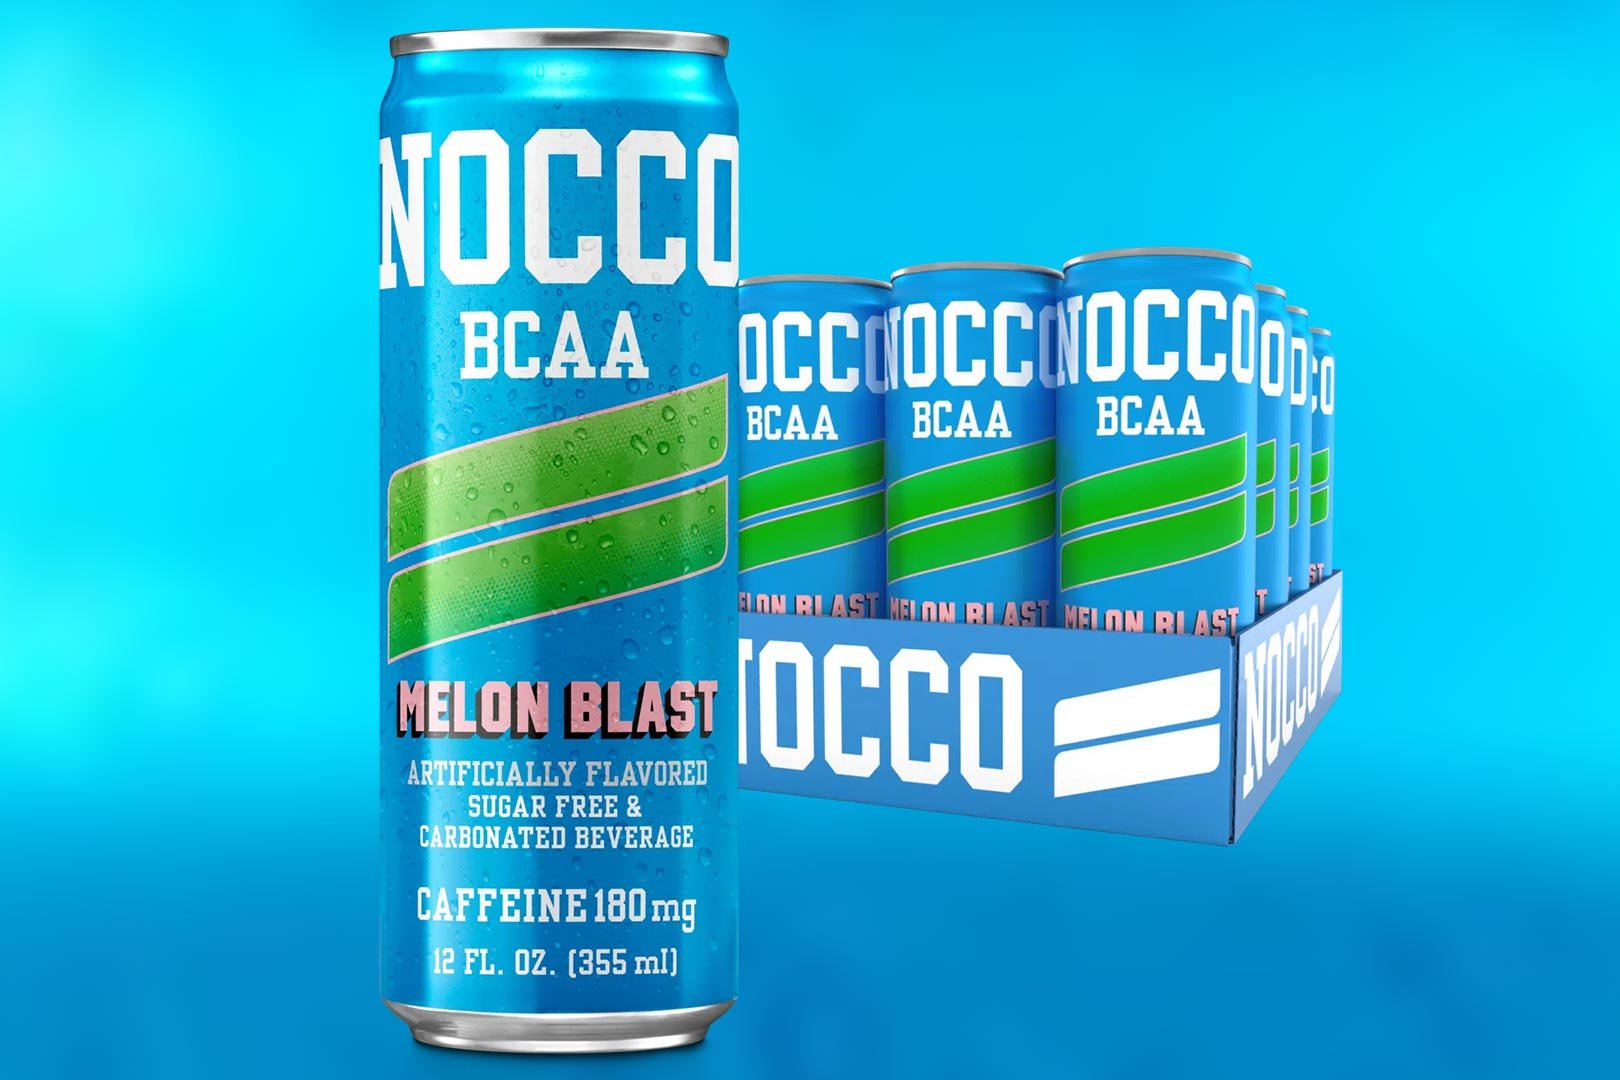 NOCCO Energy Drink